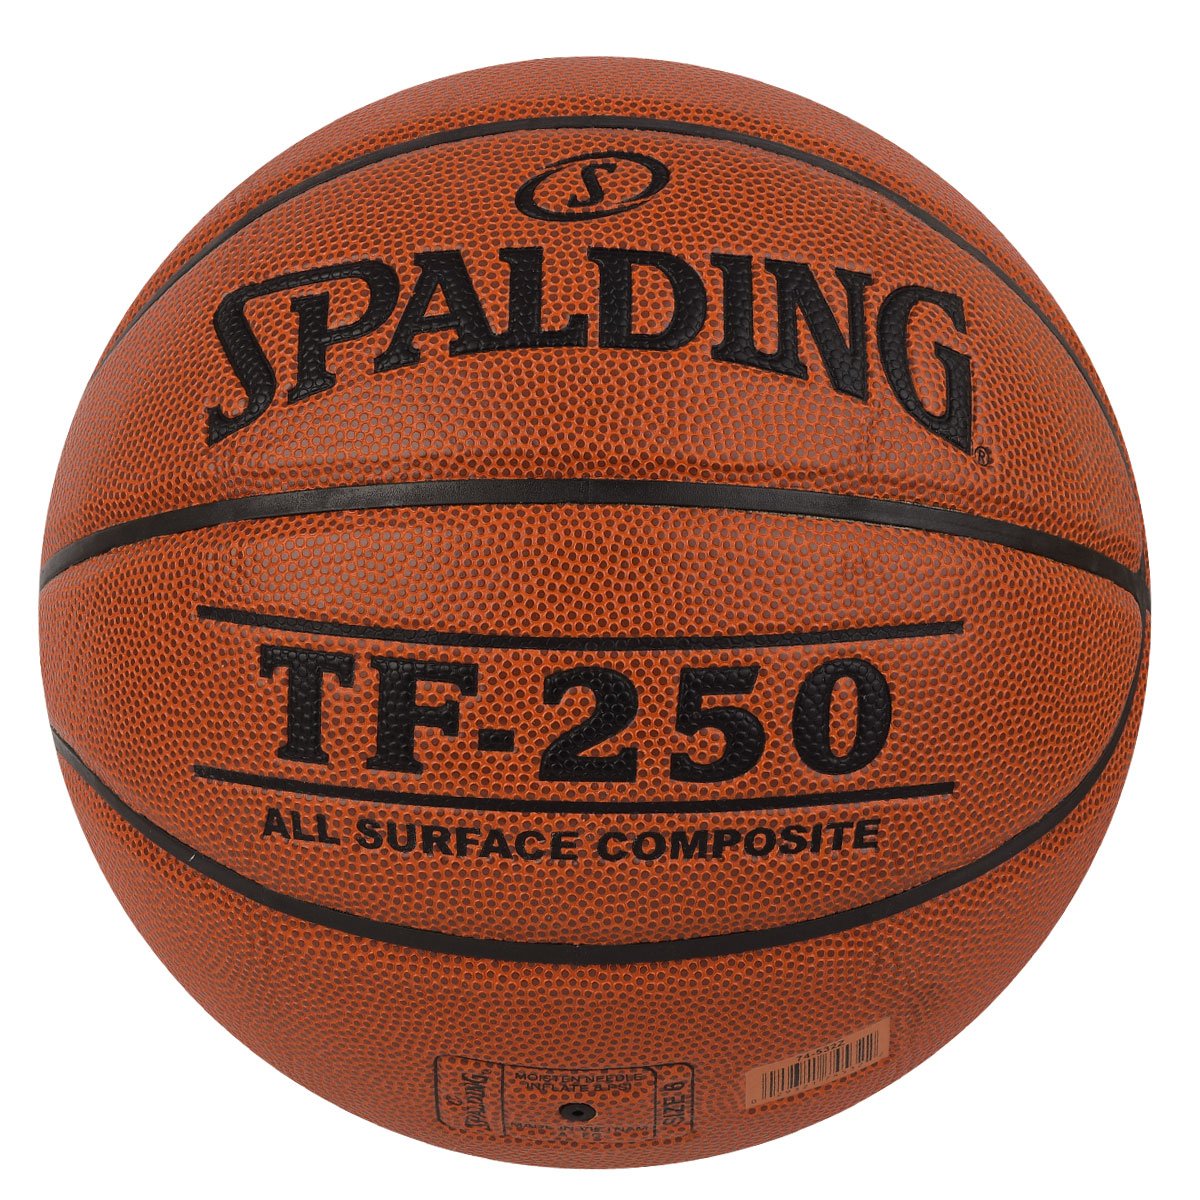 Spalding TF 250 Leather Pasted Basketball - Size: 7(Brick) - Best Price online Prokicksports.com